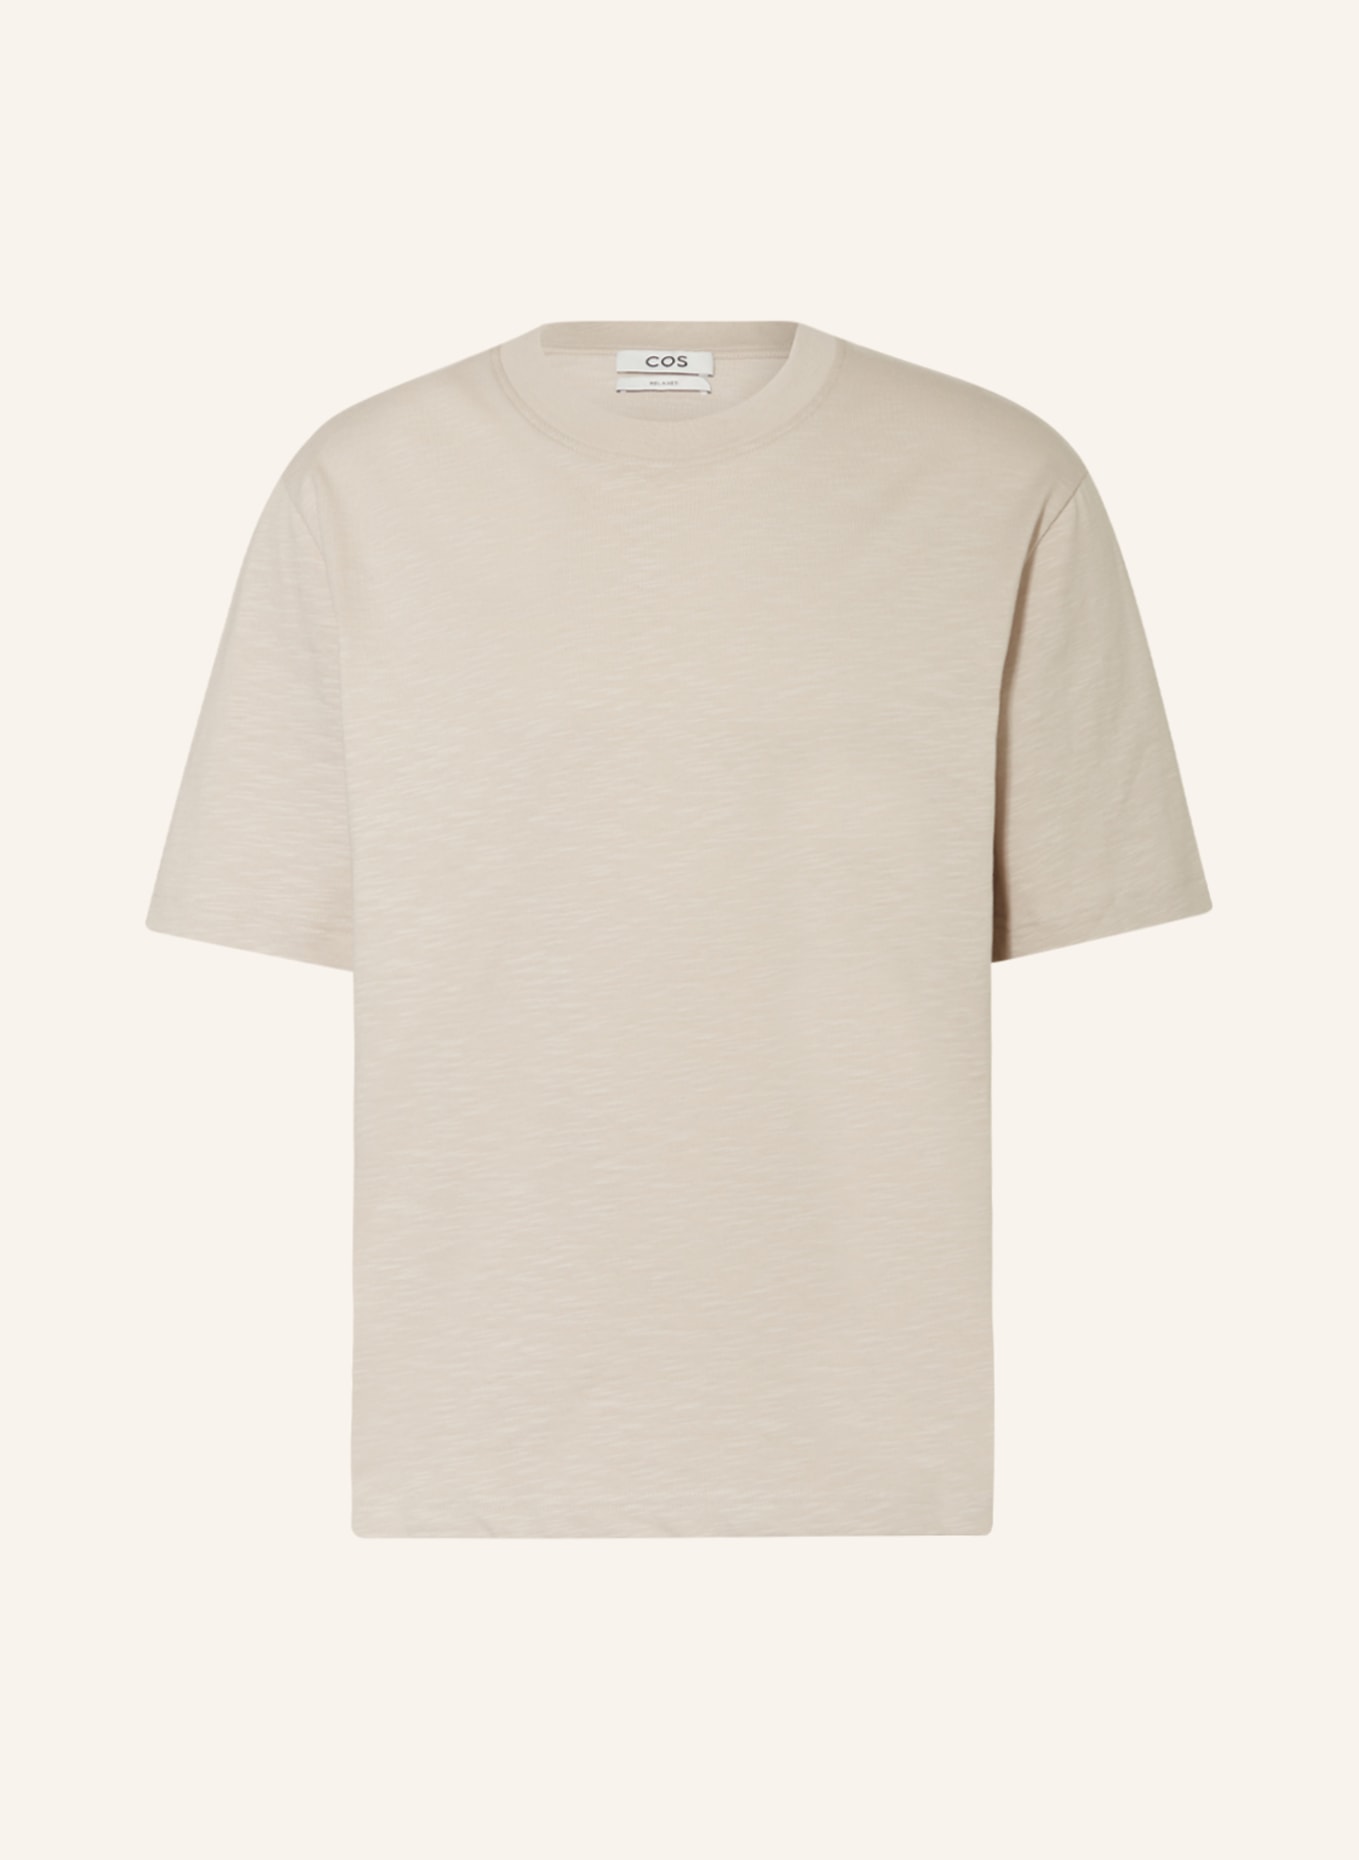 COS T-Shirt, Farbe: BEIGE (Bild 1)